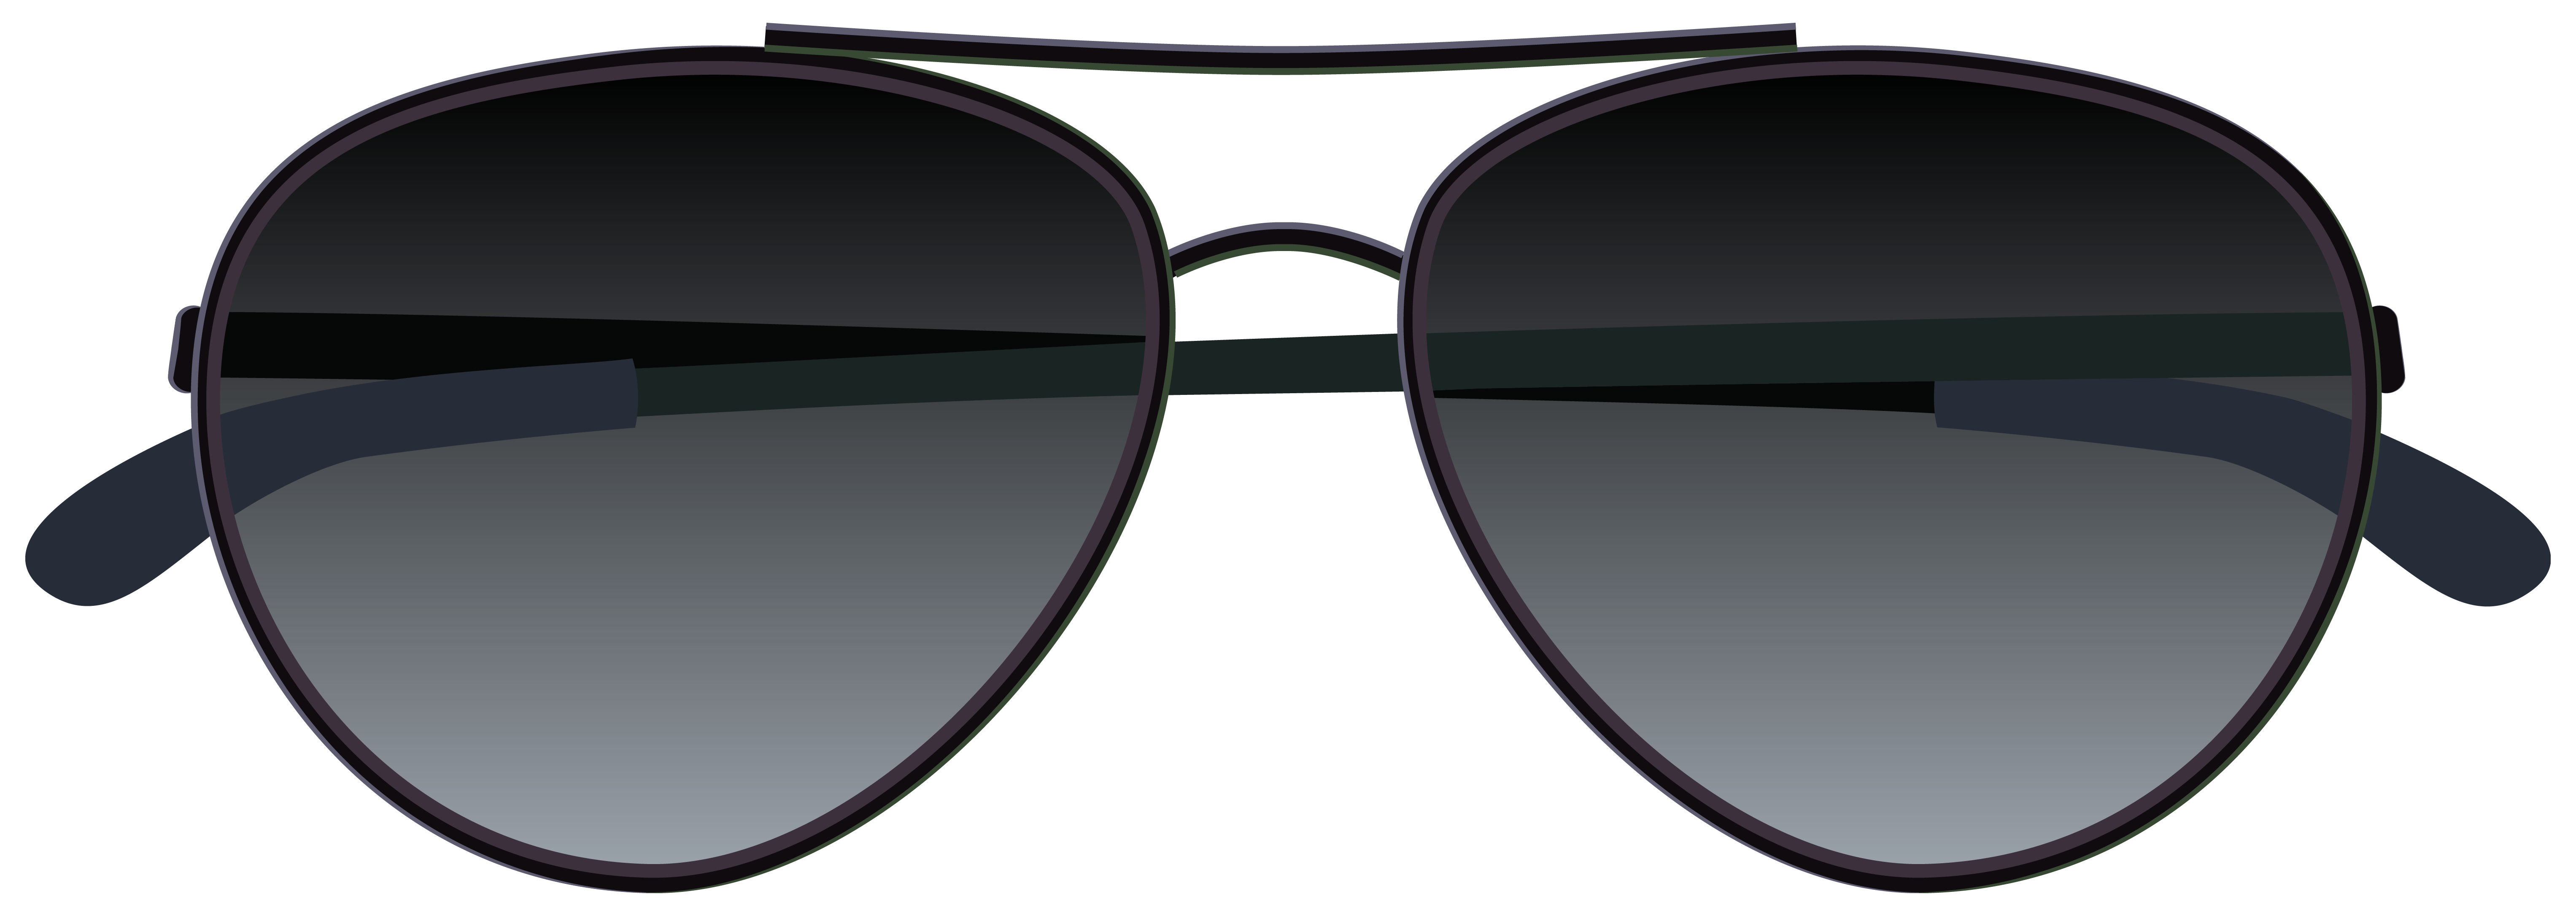 transparent background sunglasses png
